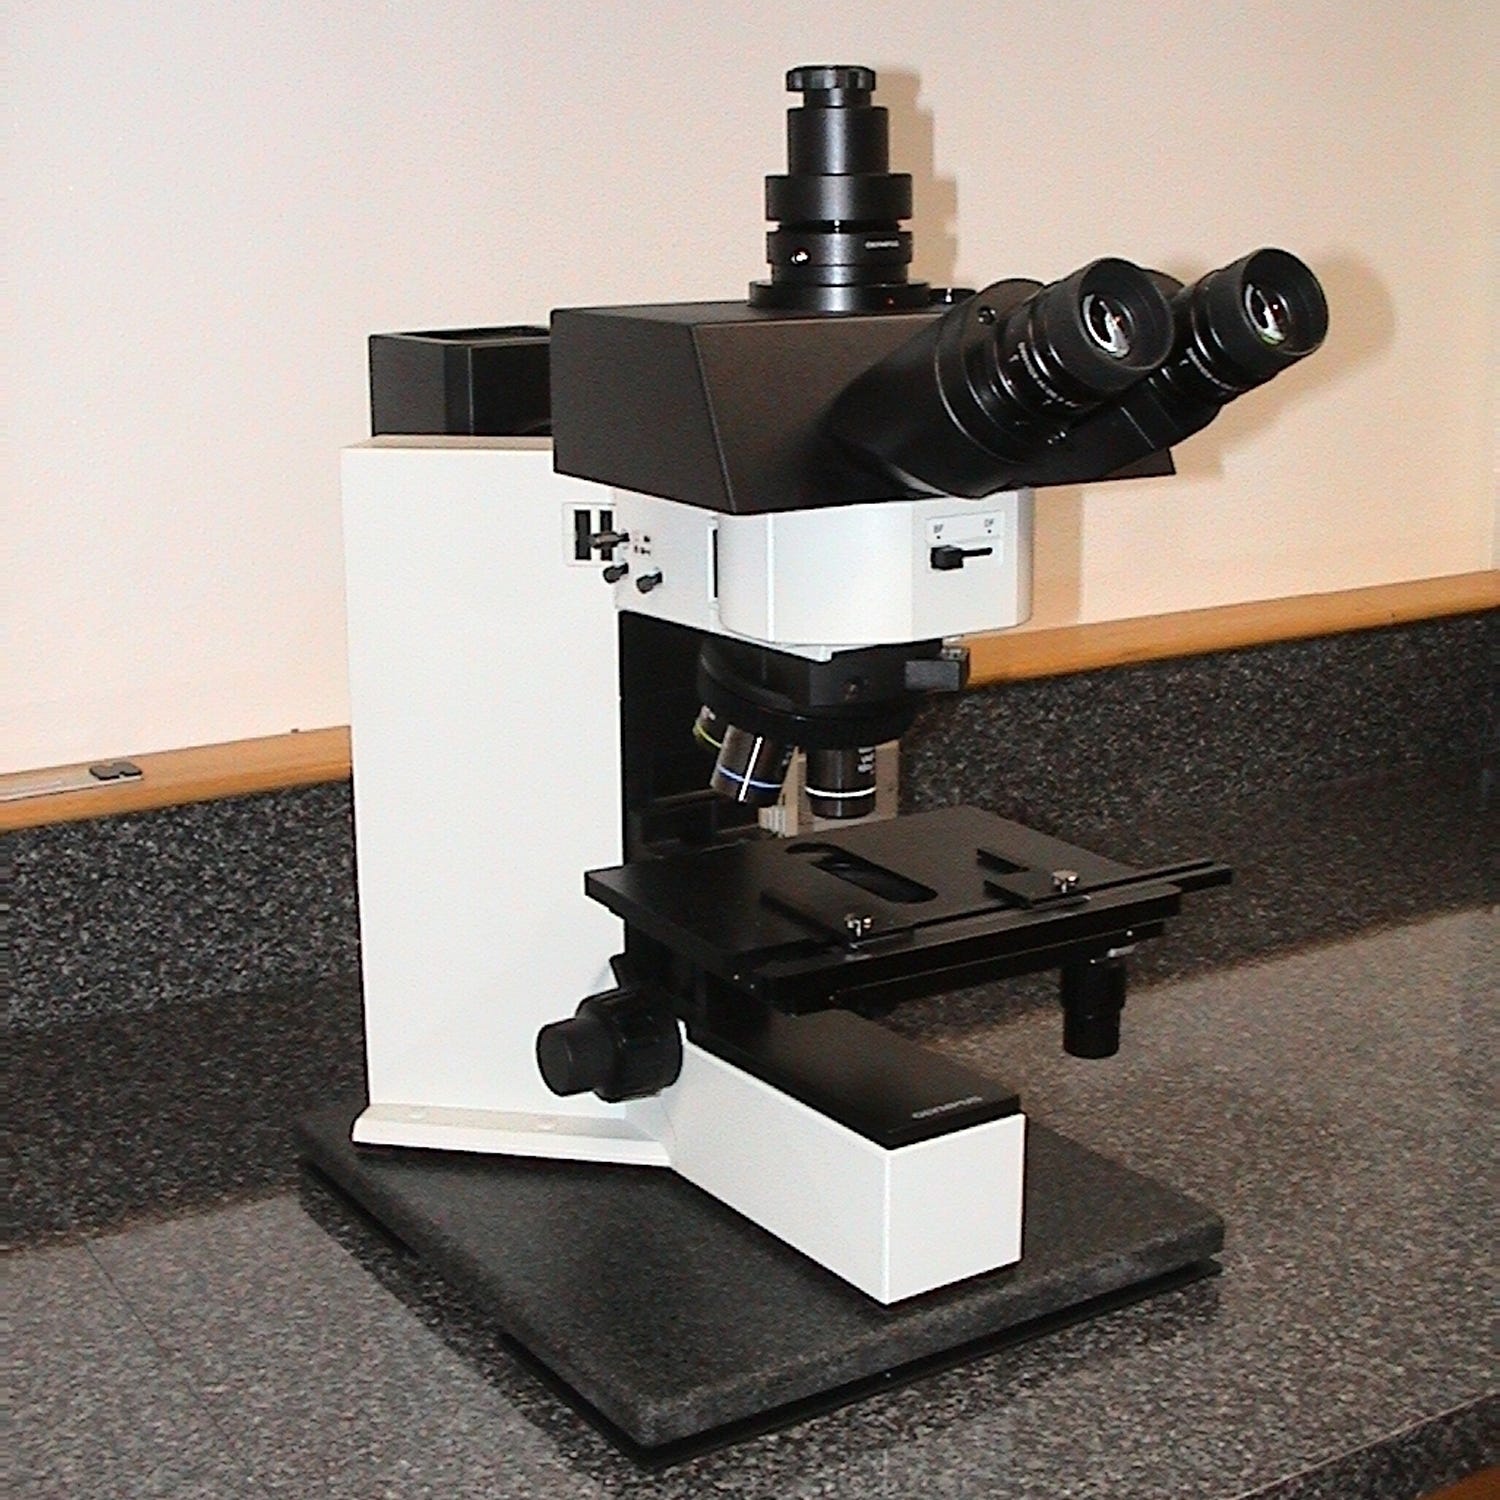 Vibration-Control Granite Platform With Microscope